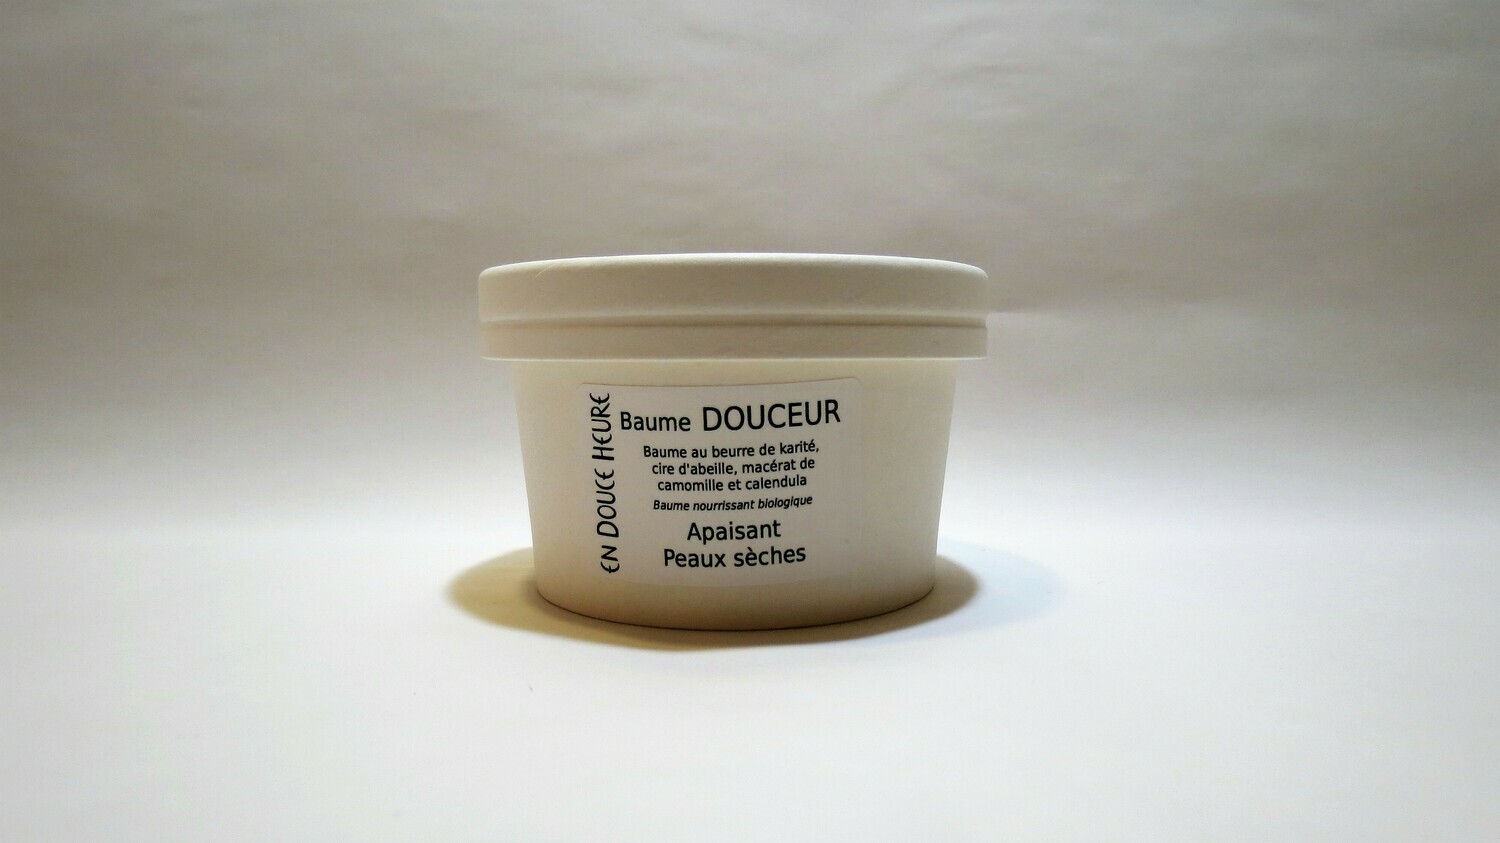 Baume DOUCEUR - 100g